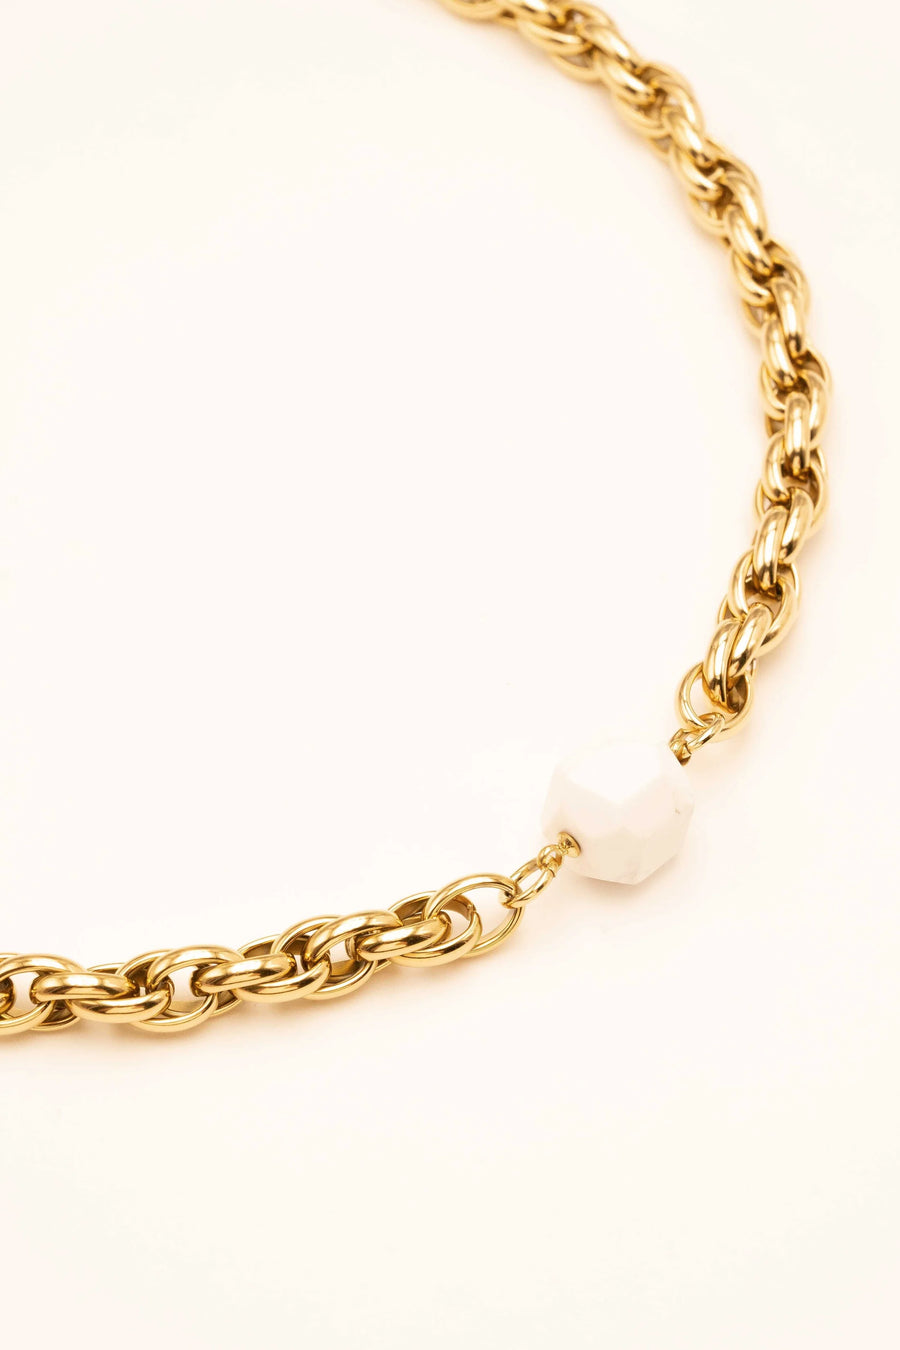 Gold Chain with White Gemstone